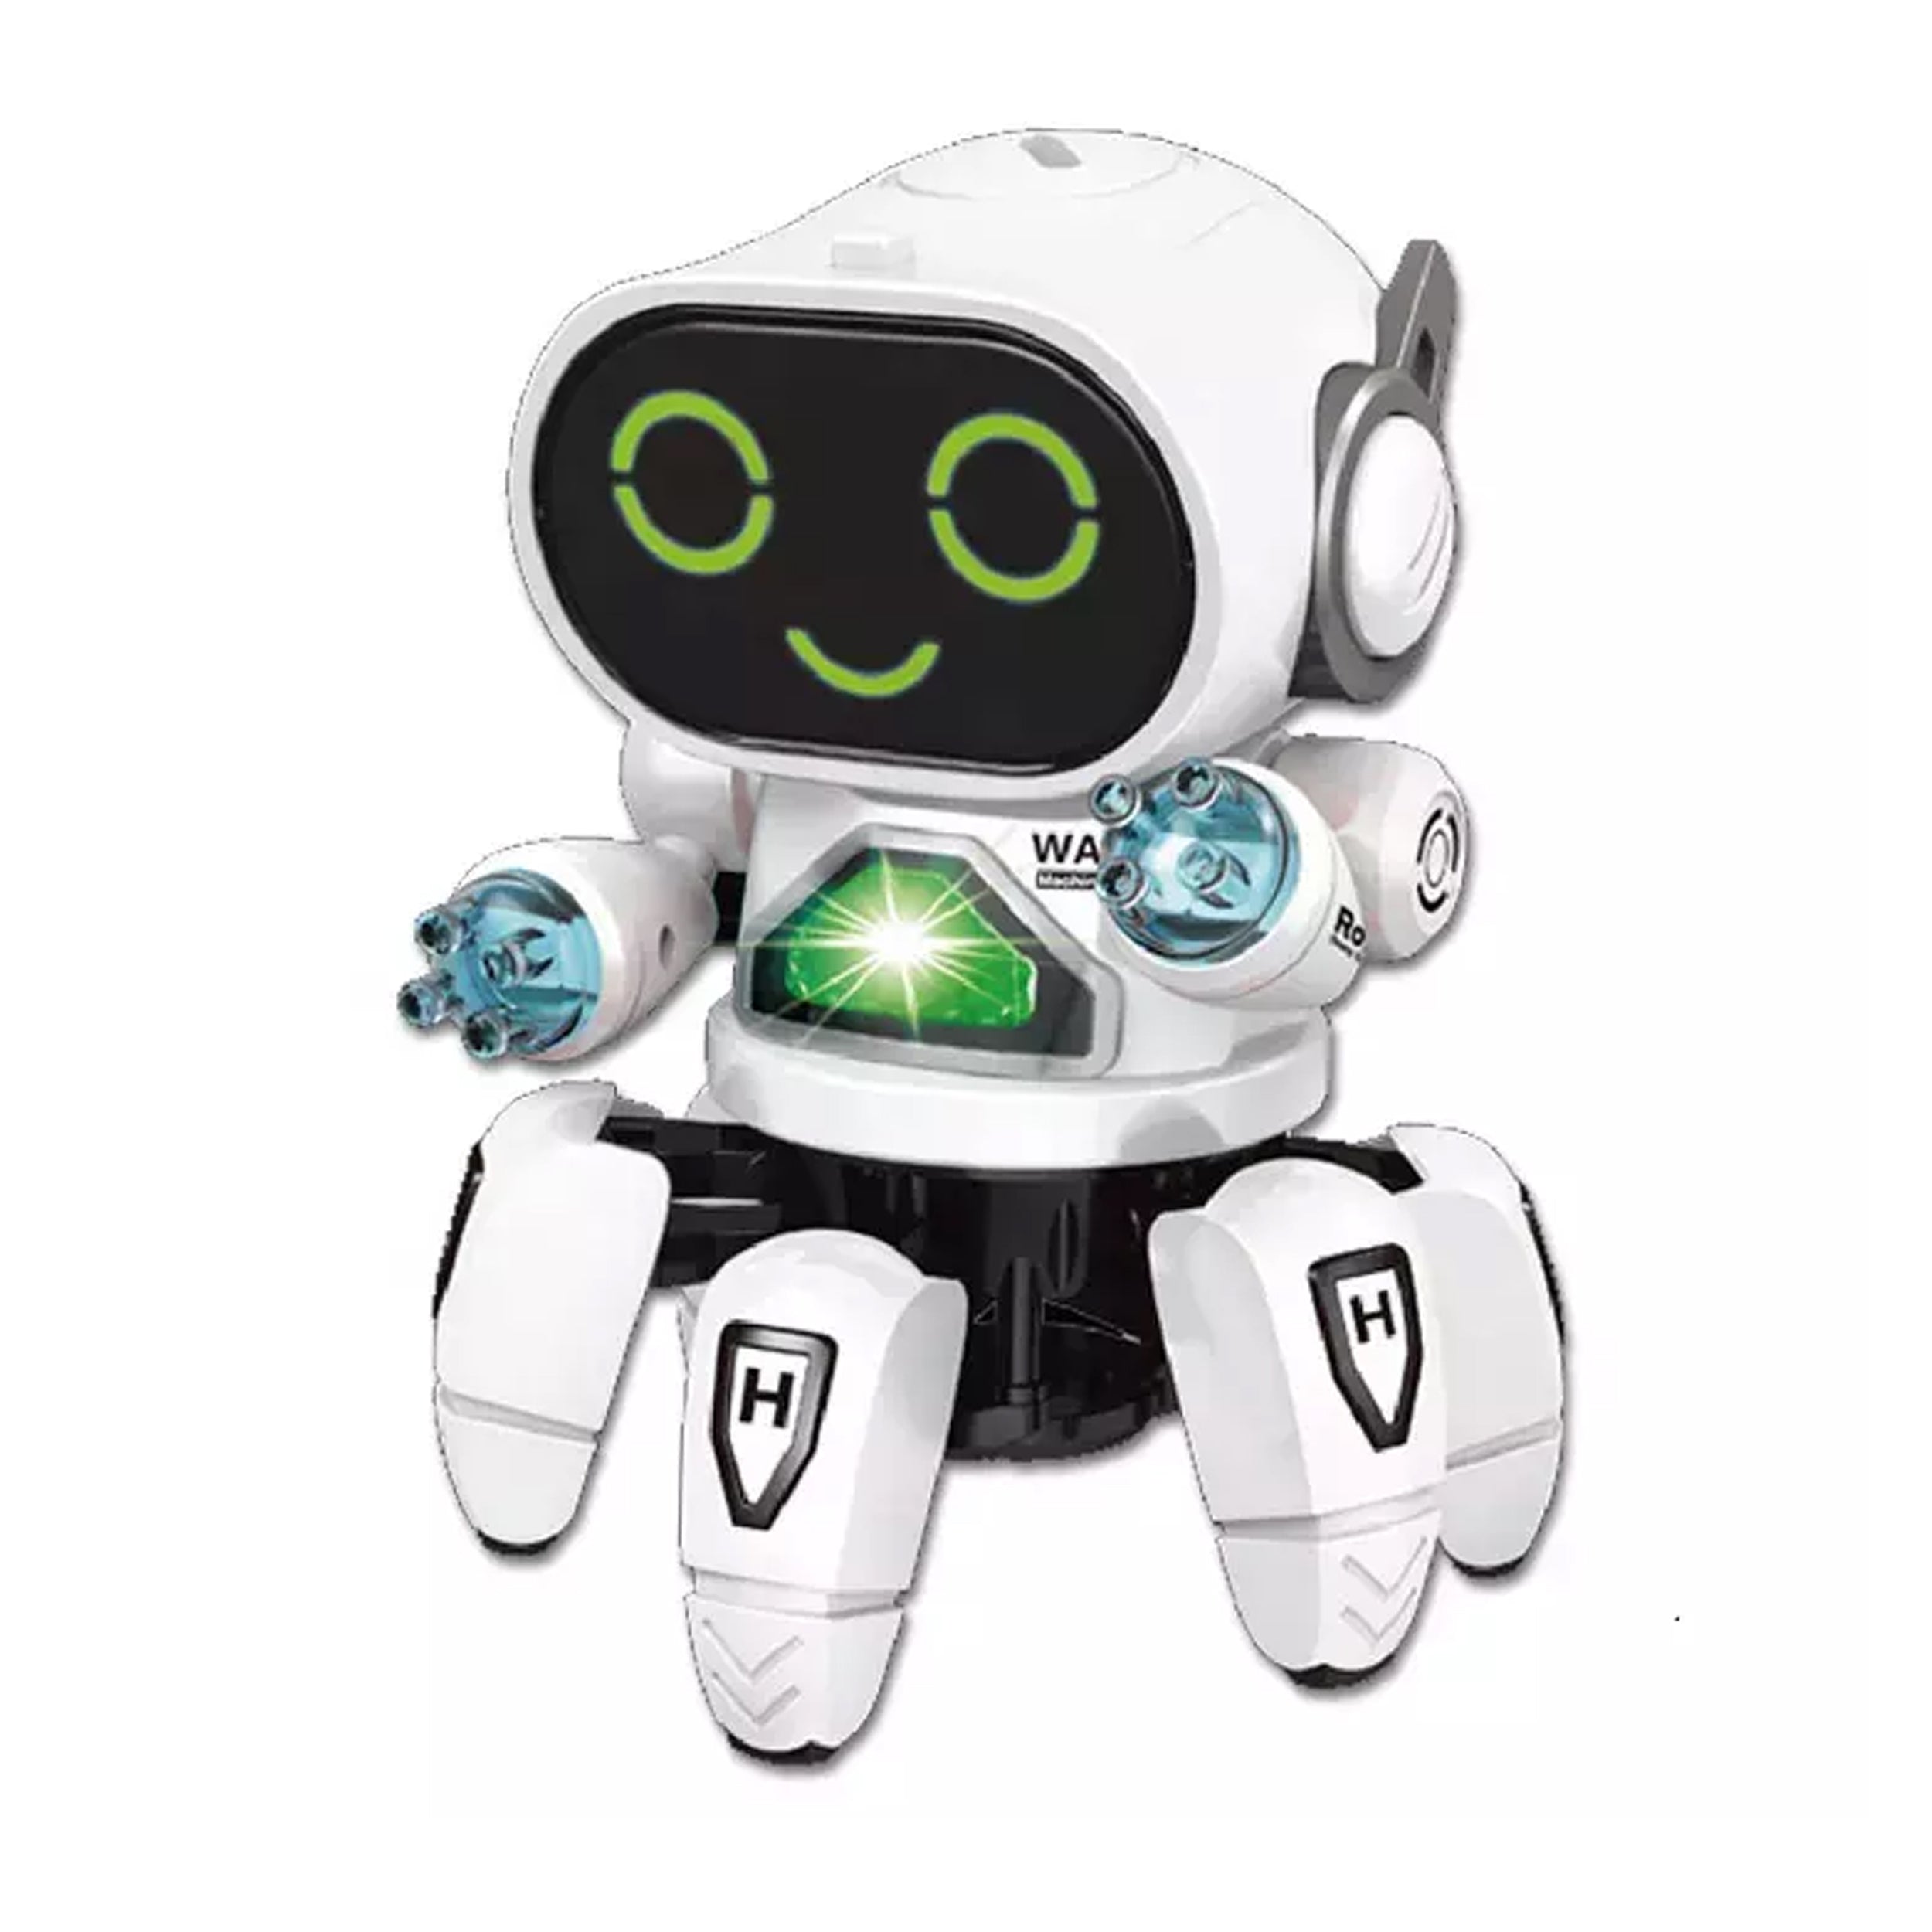 Music & Light Dancing Robot Toy